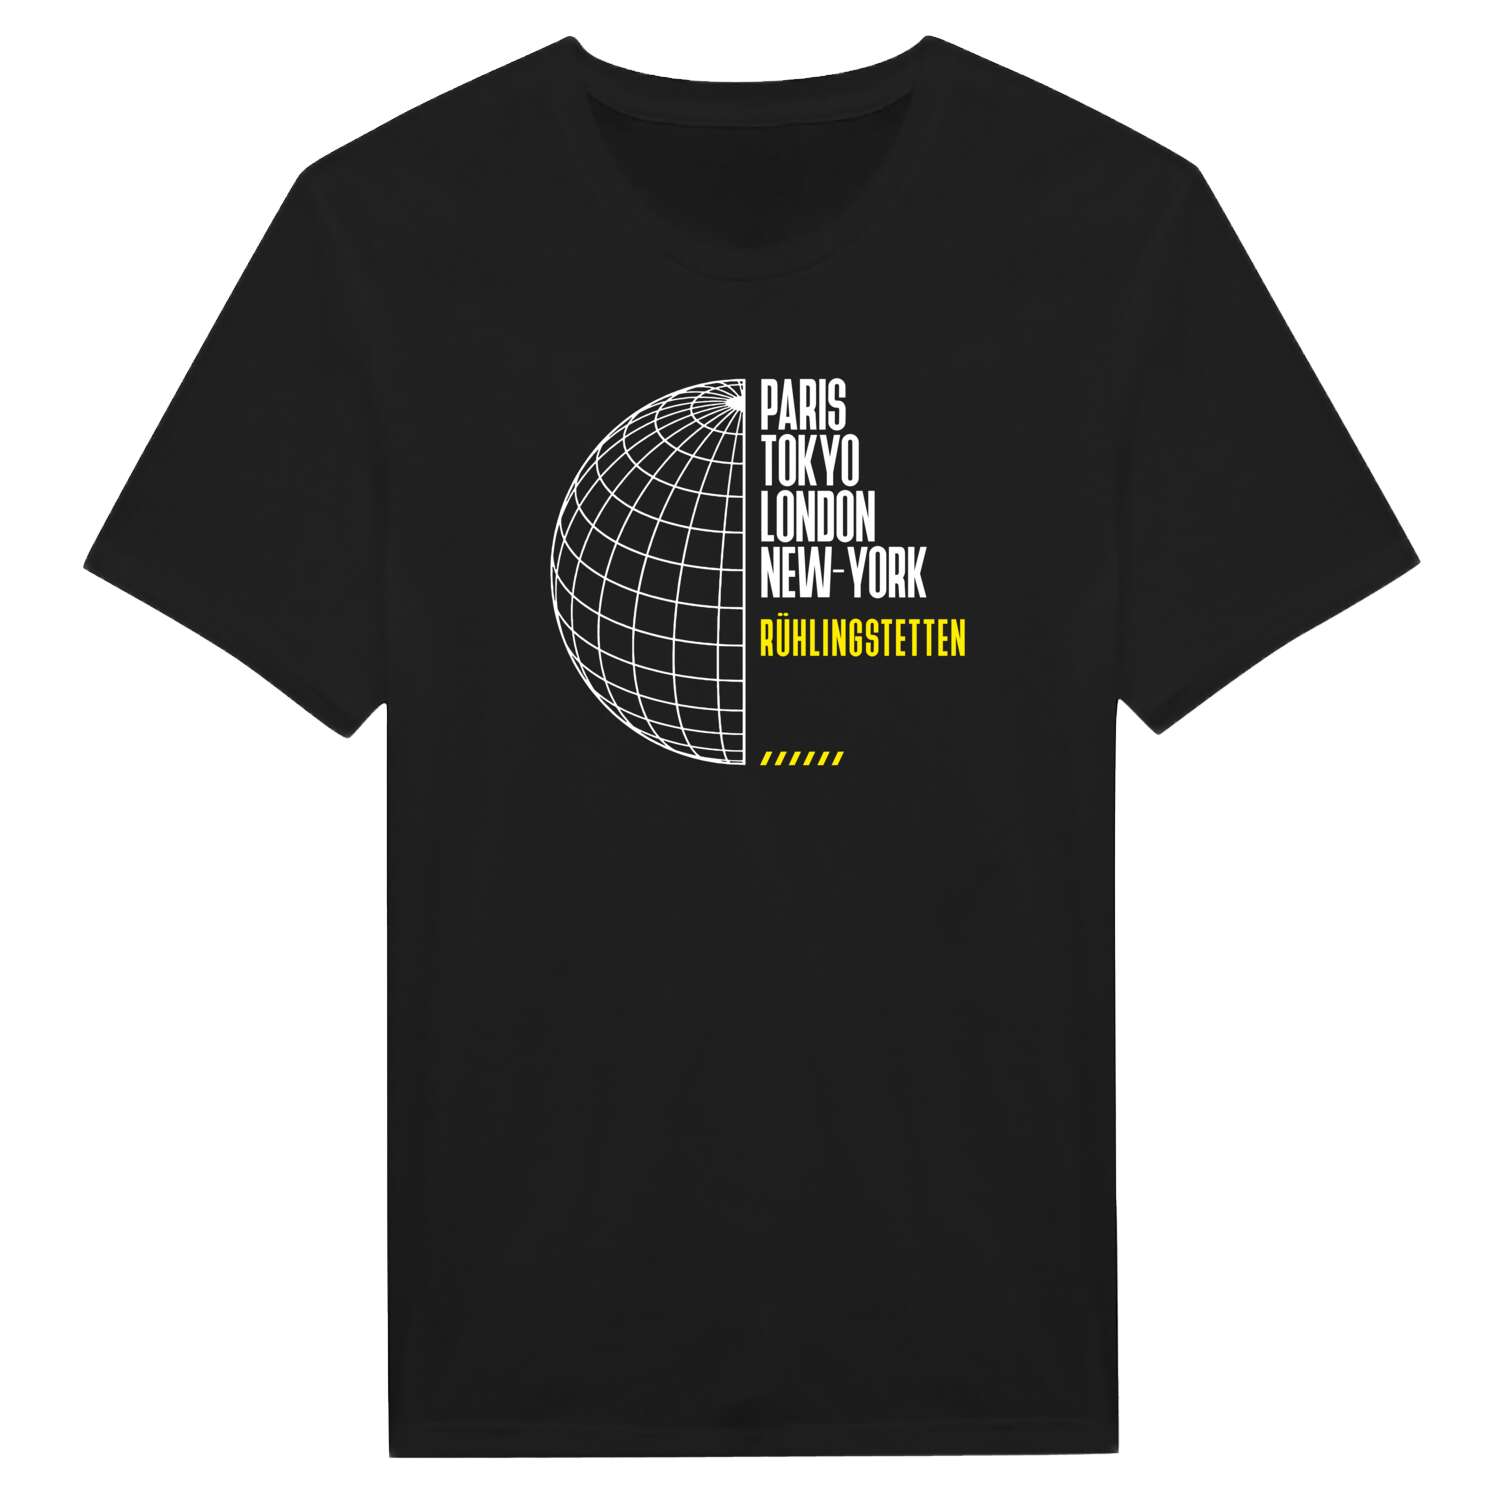 Rühlingstetten T-Shirt »Paris Tokyo London«